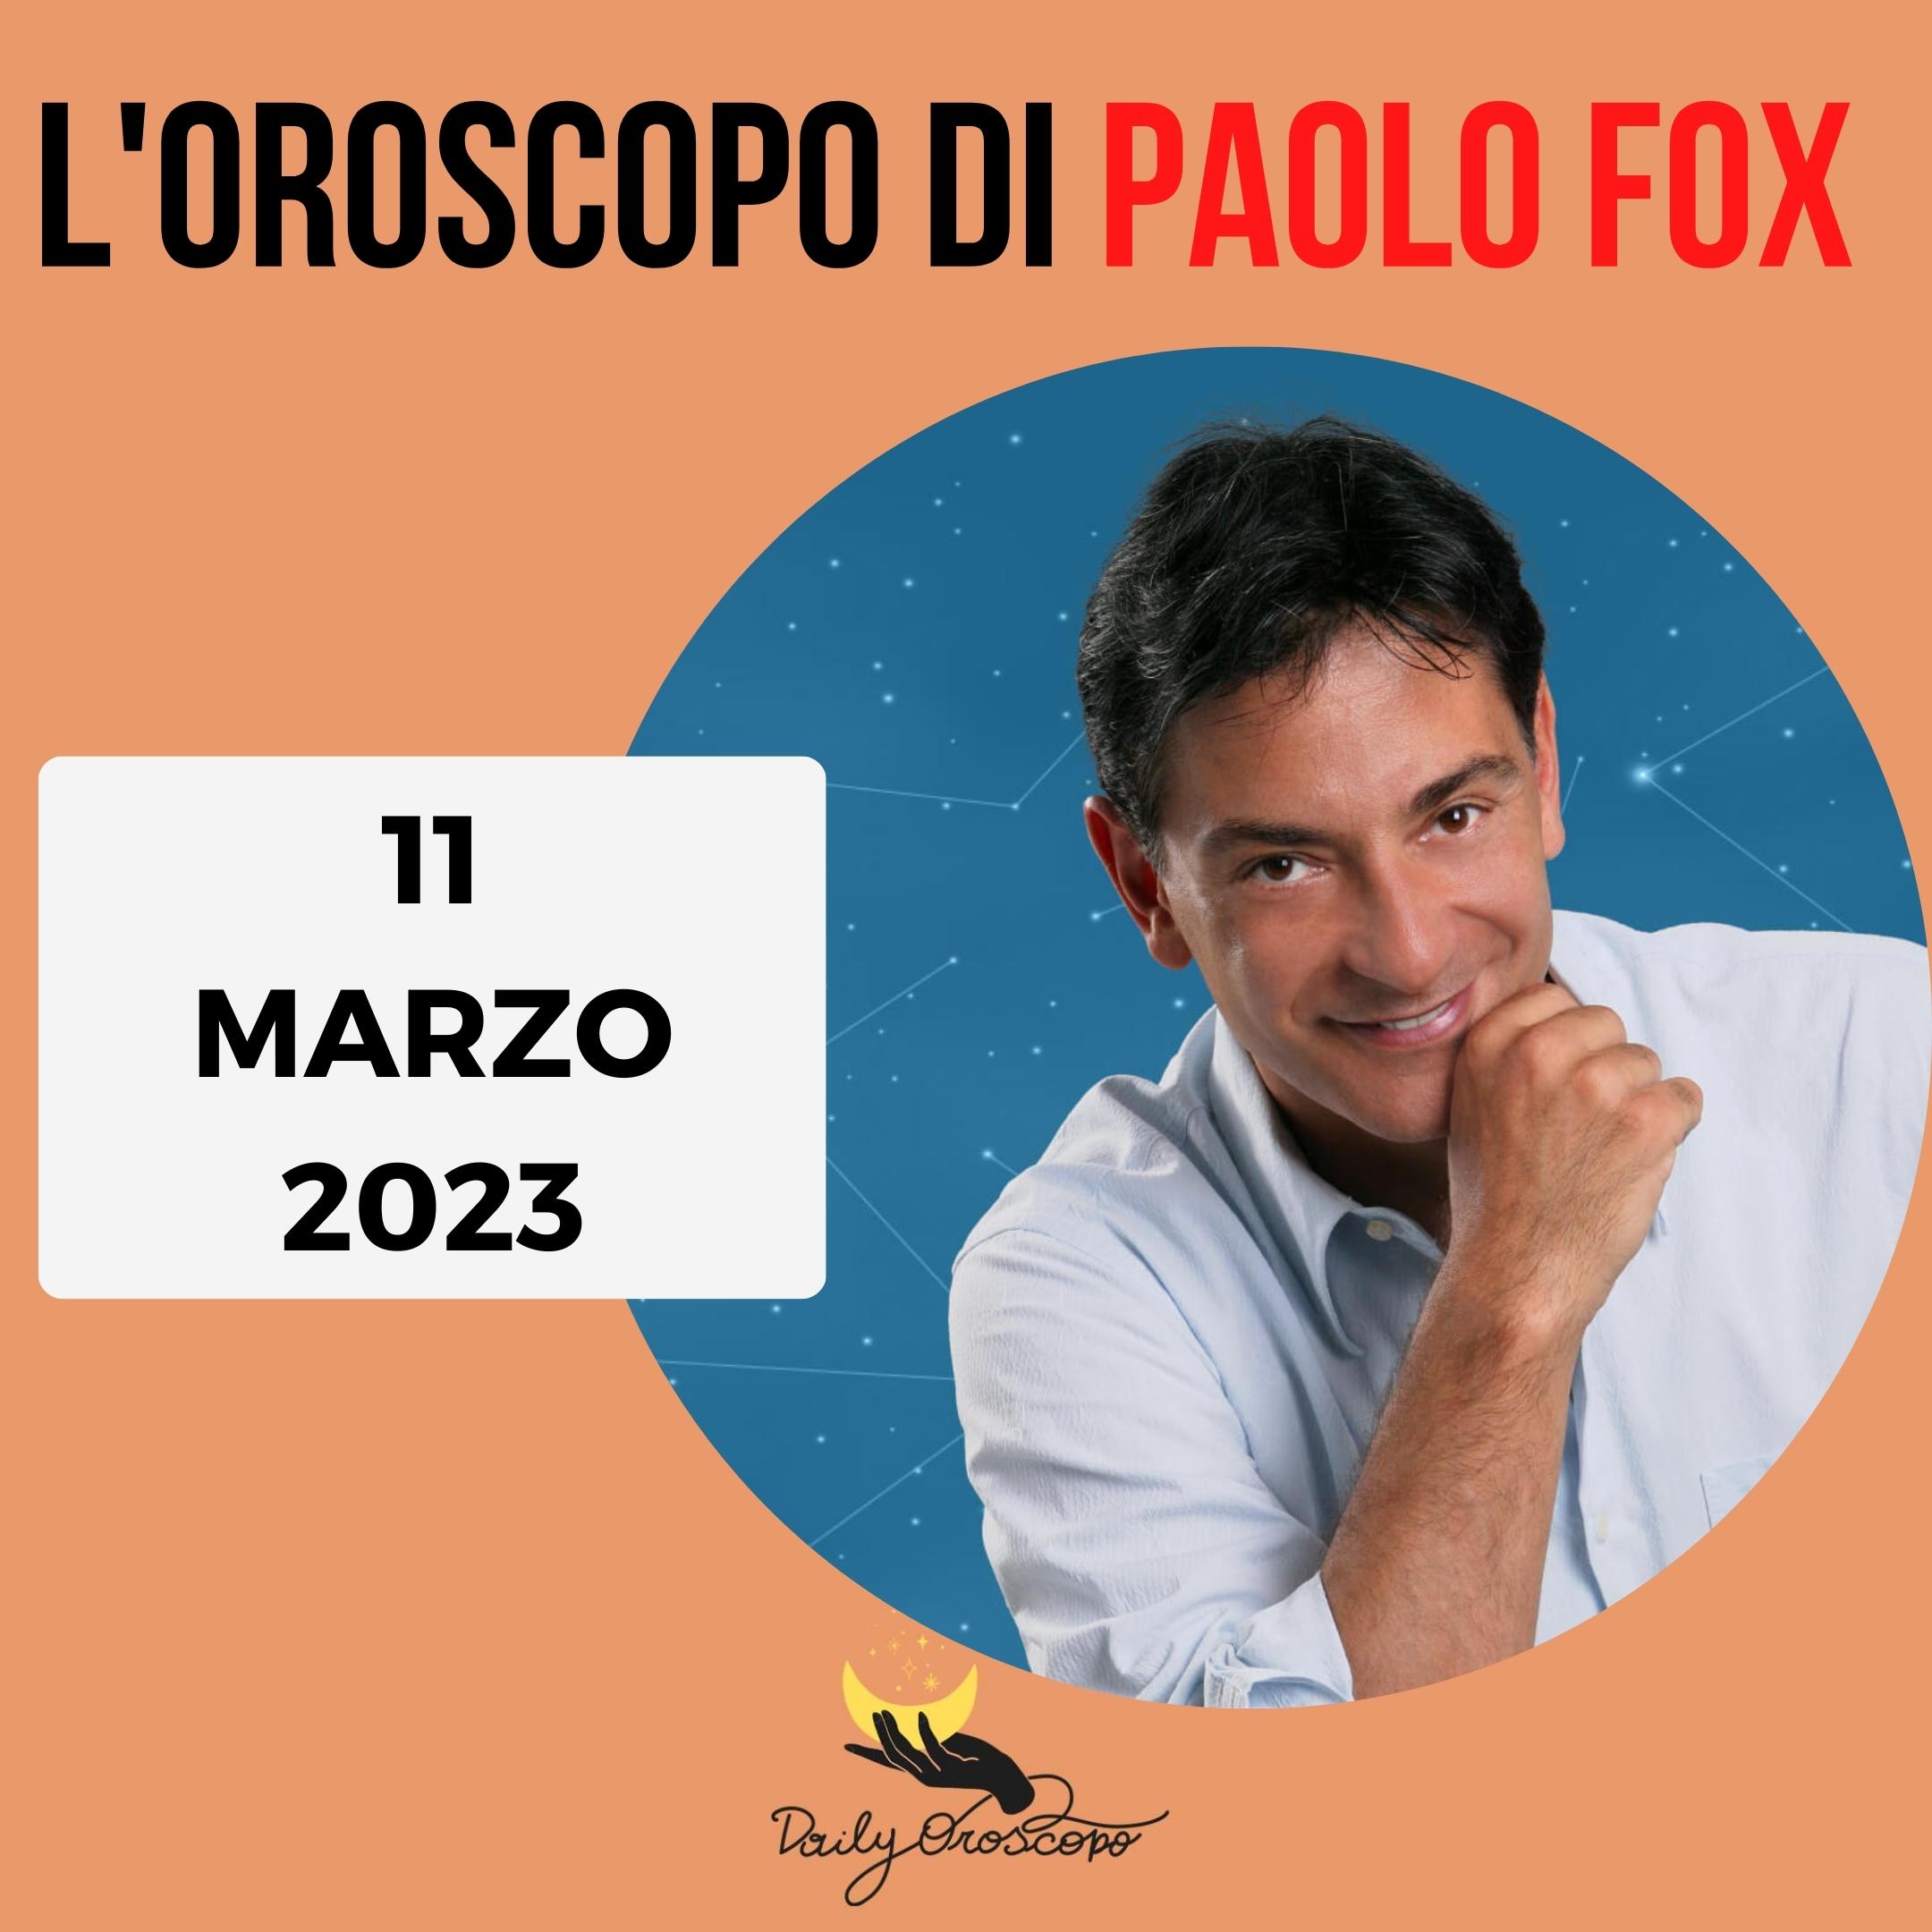 Oroscopo Paolo Fox oggi 11 marzo 2023